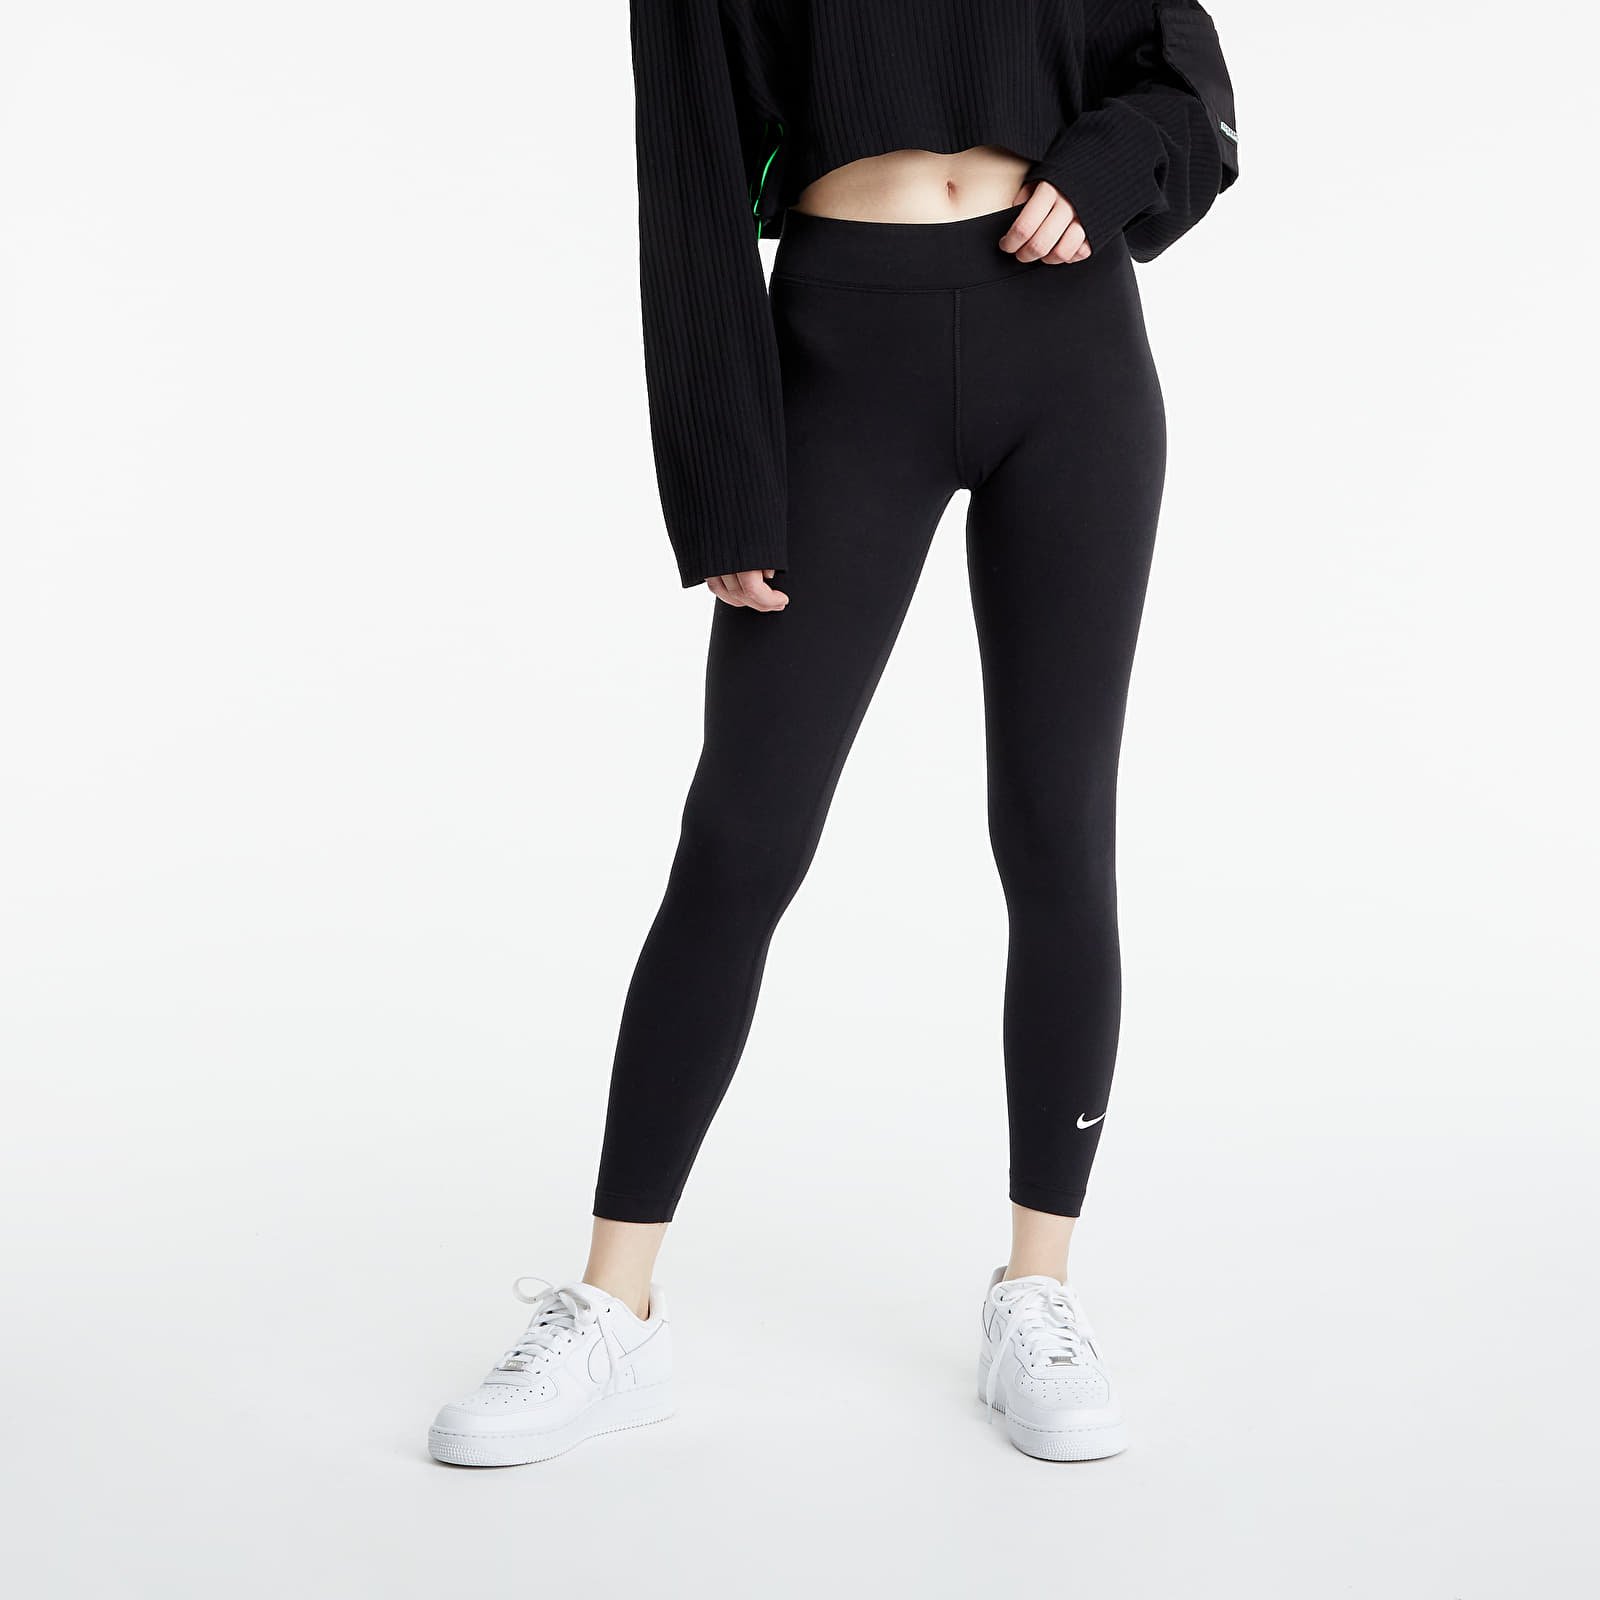 Nike One Training dri fit mid rise leggings in teal | ASOS